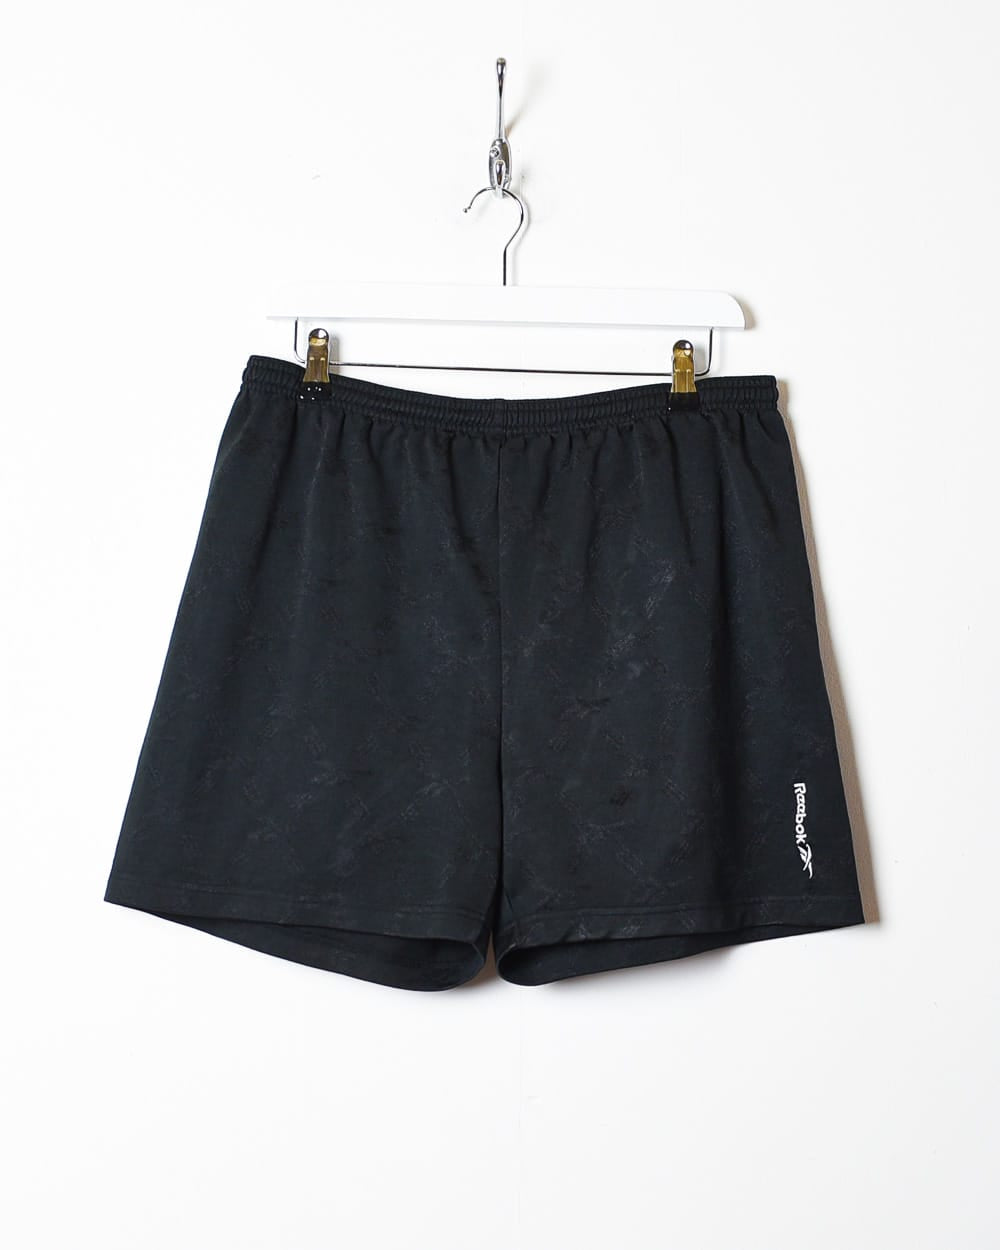 Black Reebok Shorts - Medium